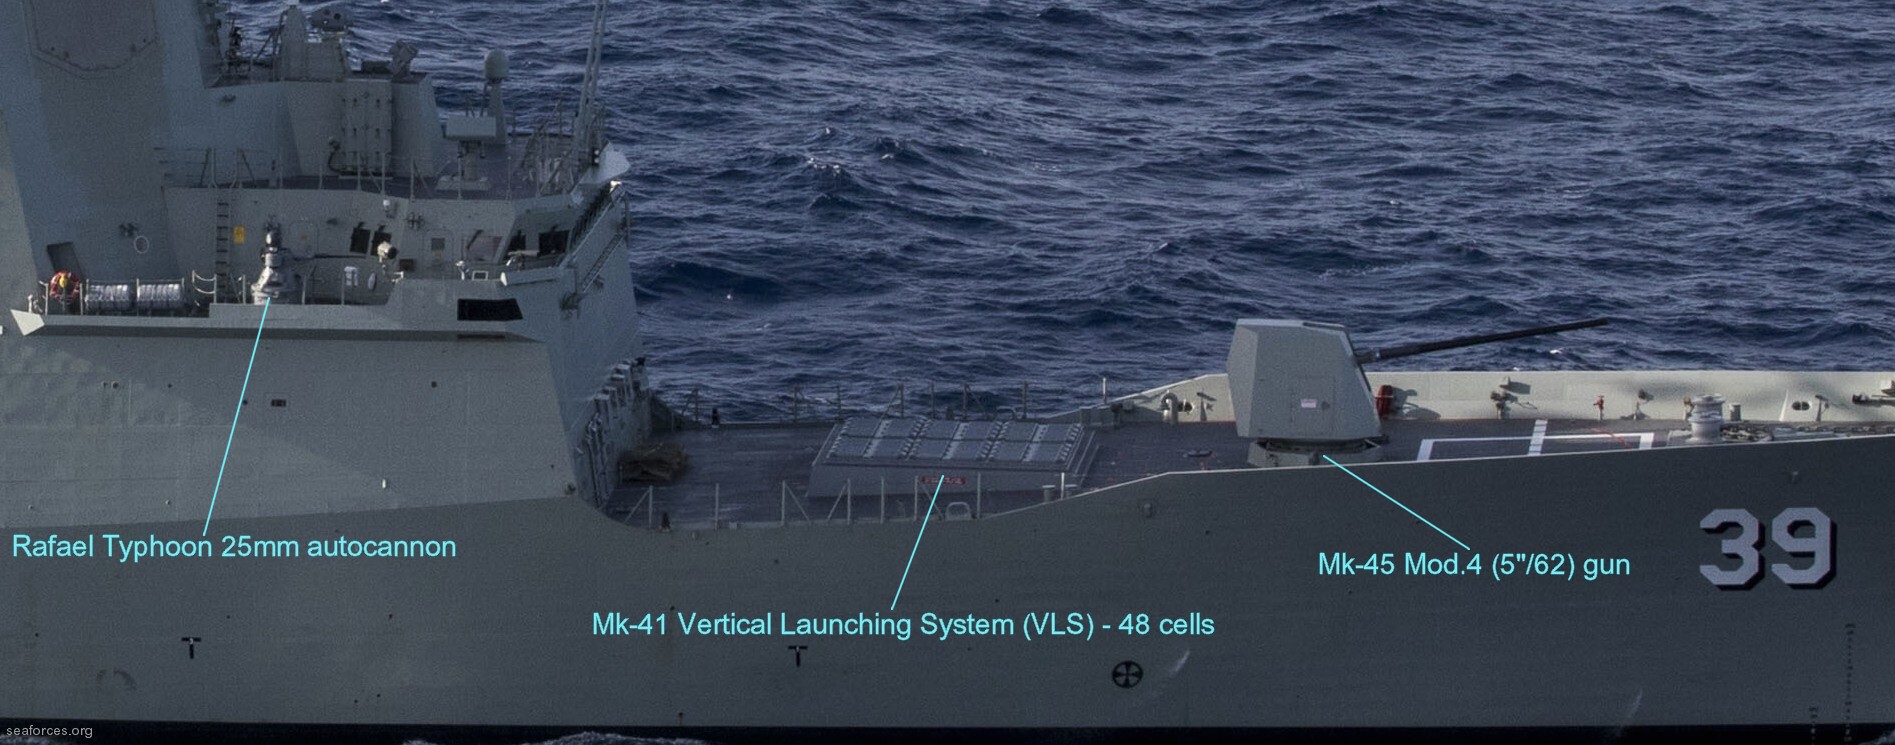 ddgh 39 hmas hobart class guided missile destroyer royal australian navy rafael typhoon 25mm autocannon mk-41 vls mk-45 gun